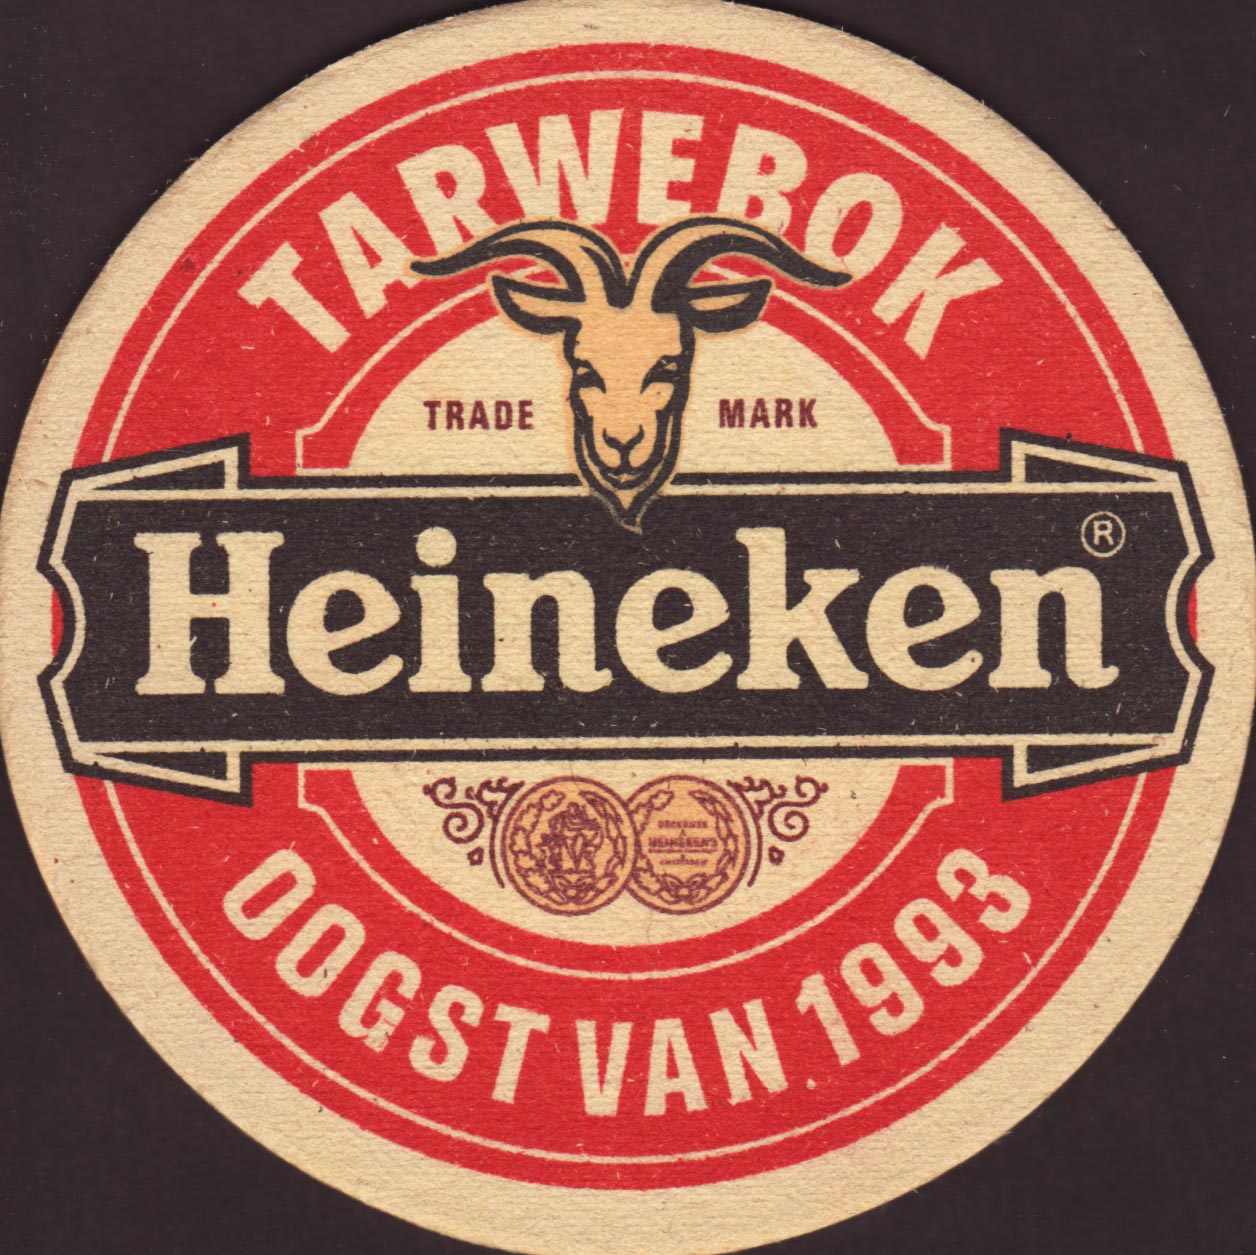 Tarwebok Heineken Bier Beer Coaster 